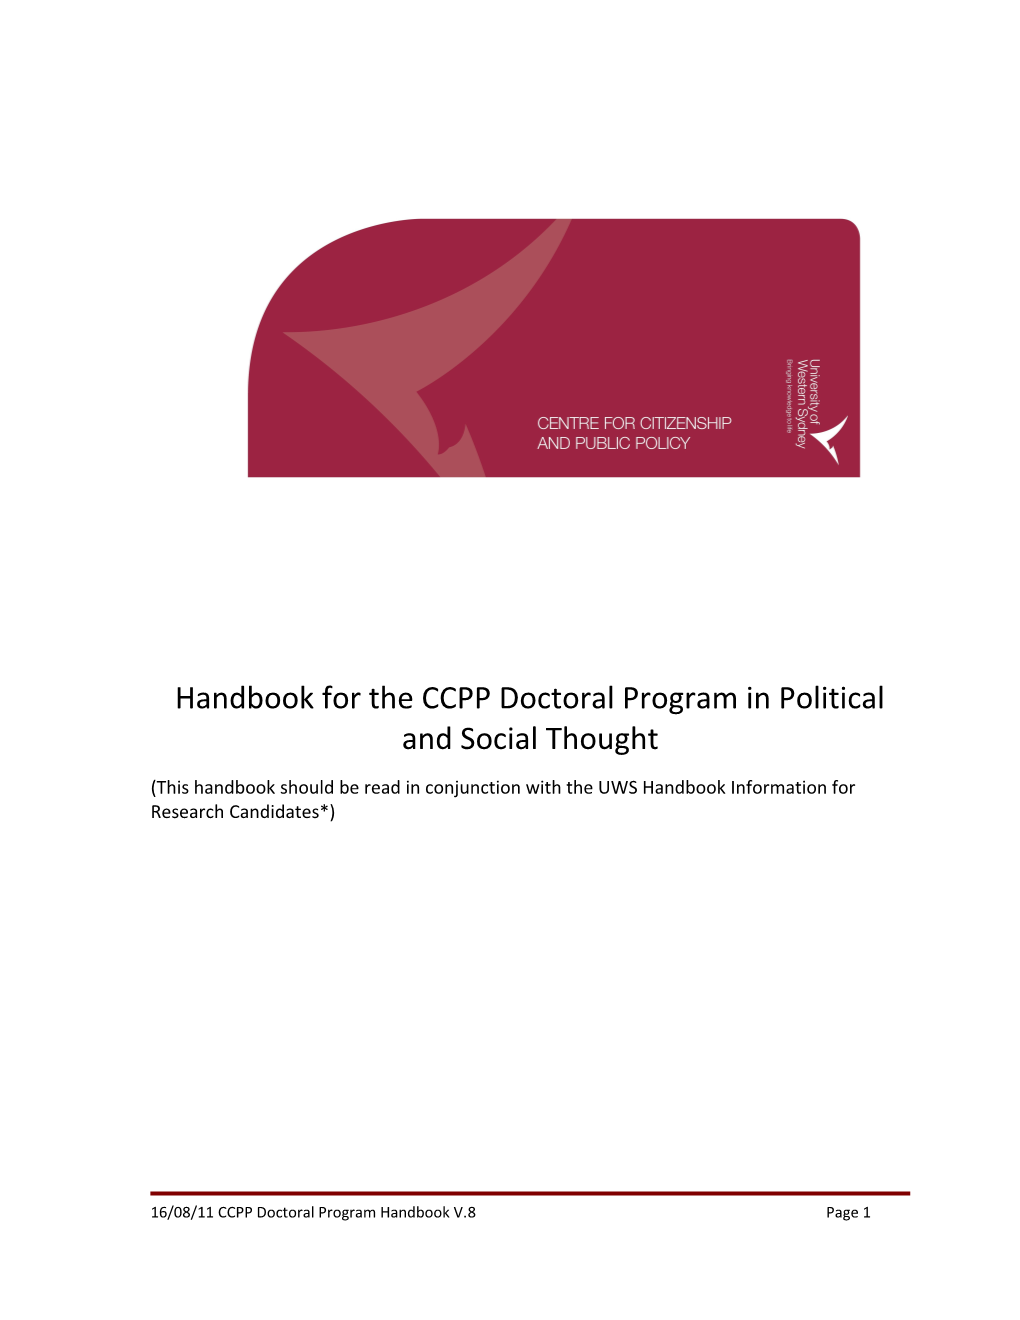 Handbook for CCPP Doctoral Program